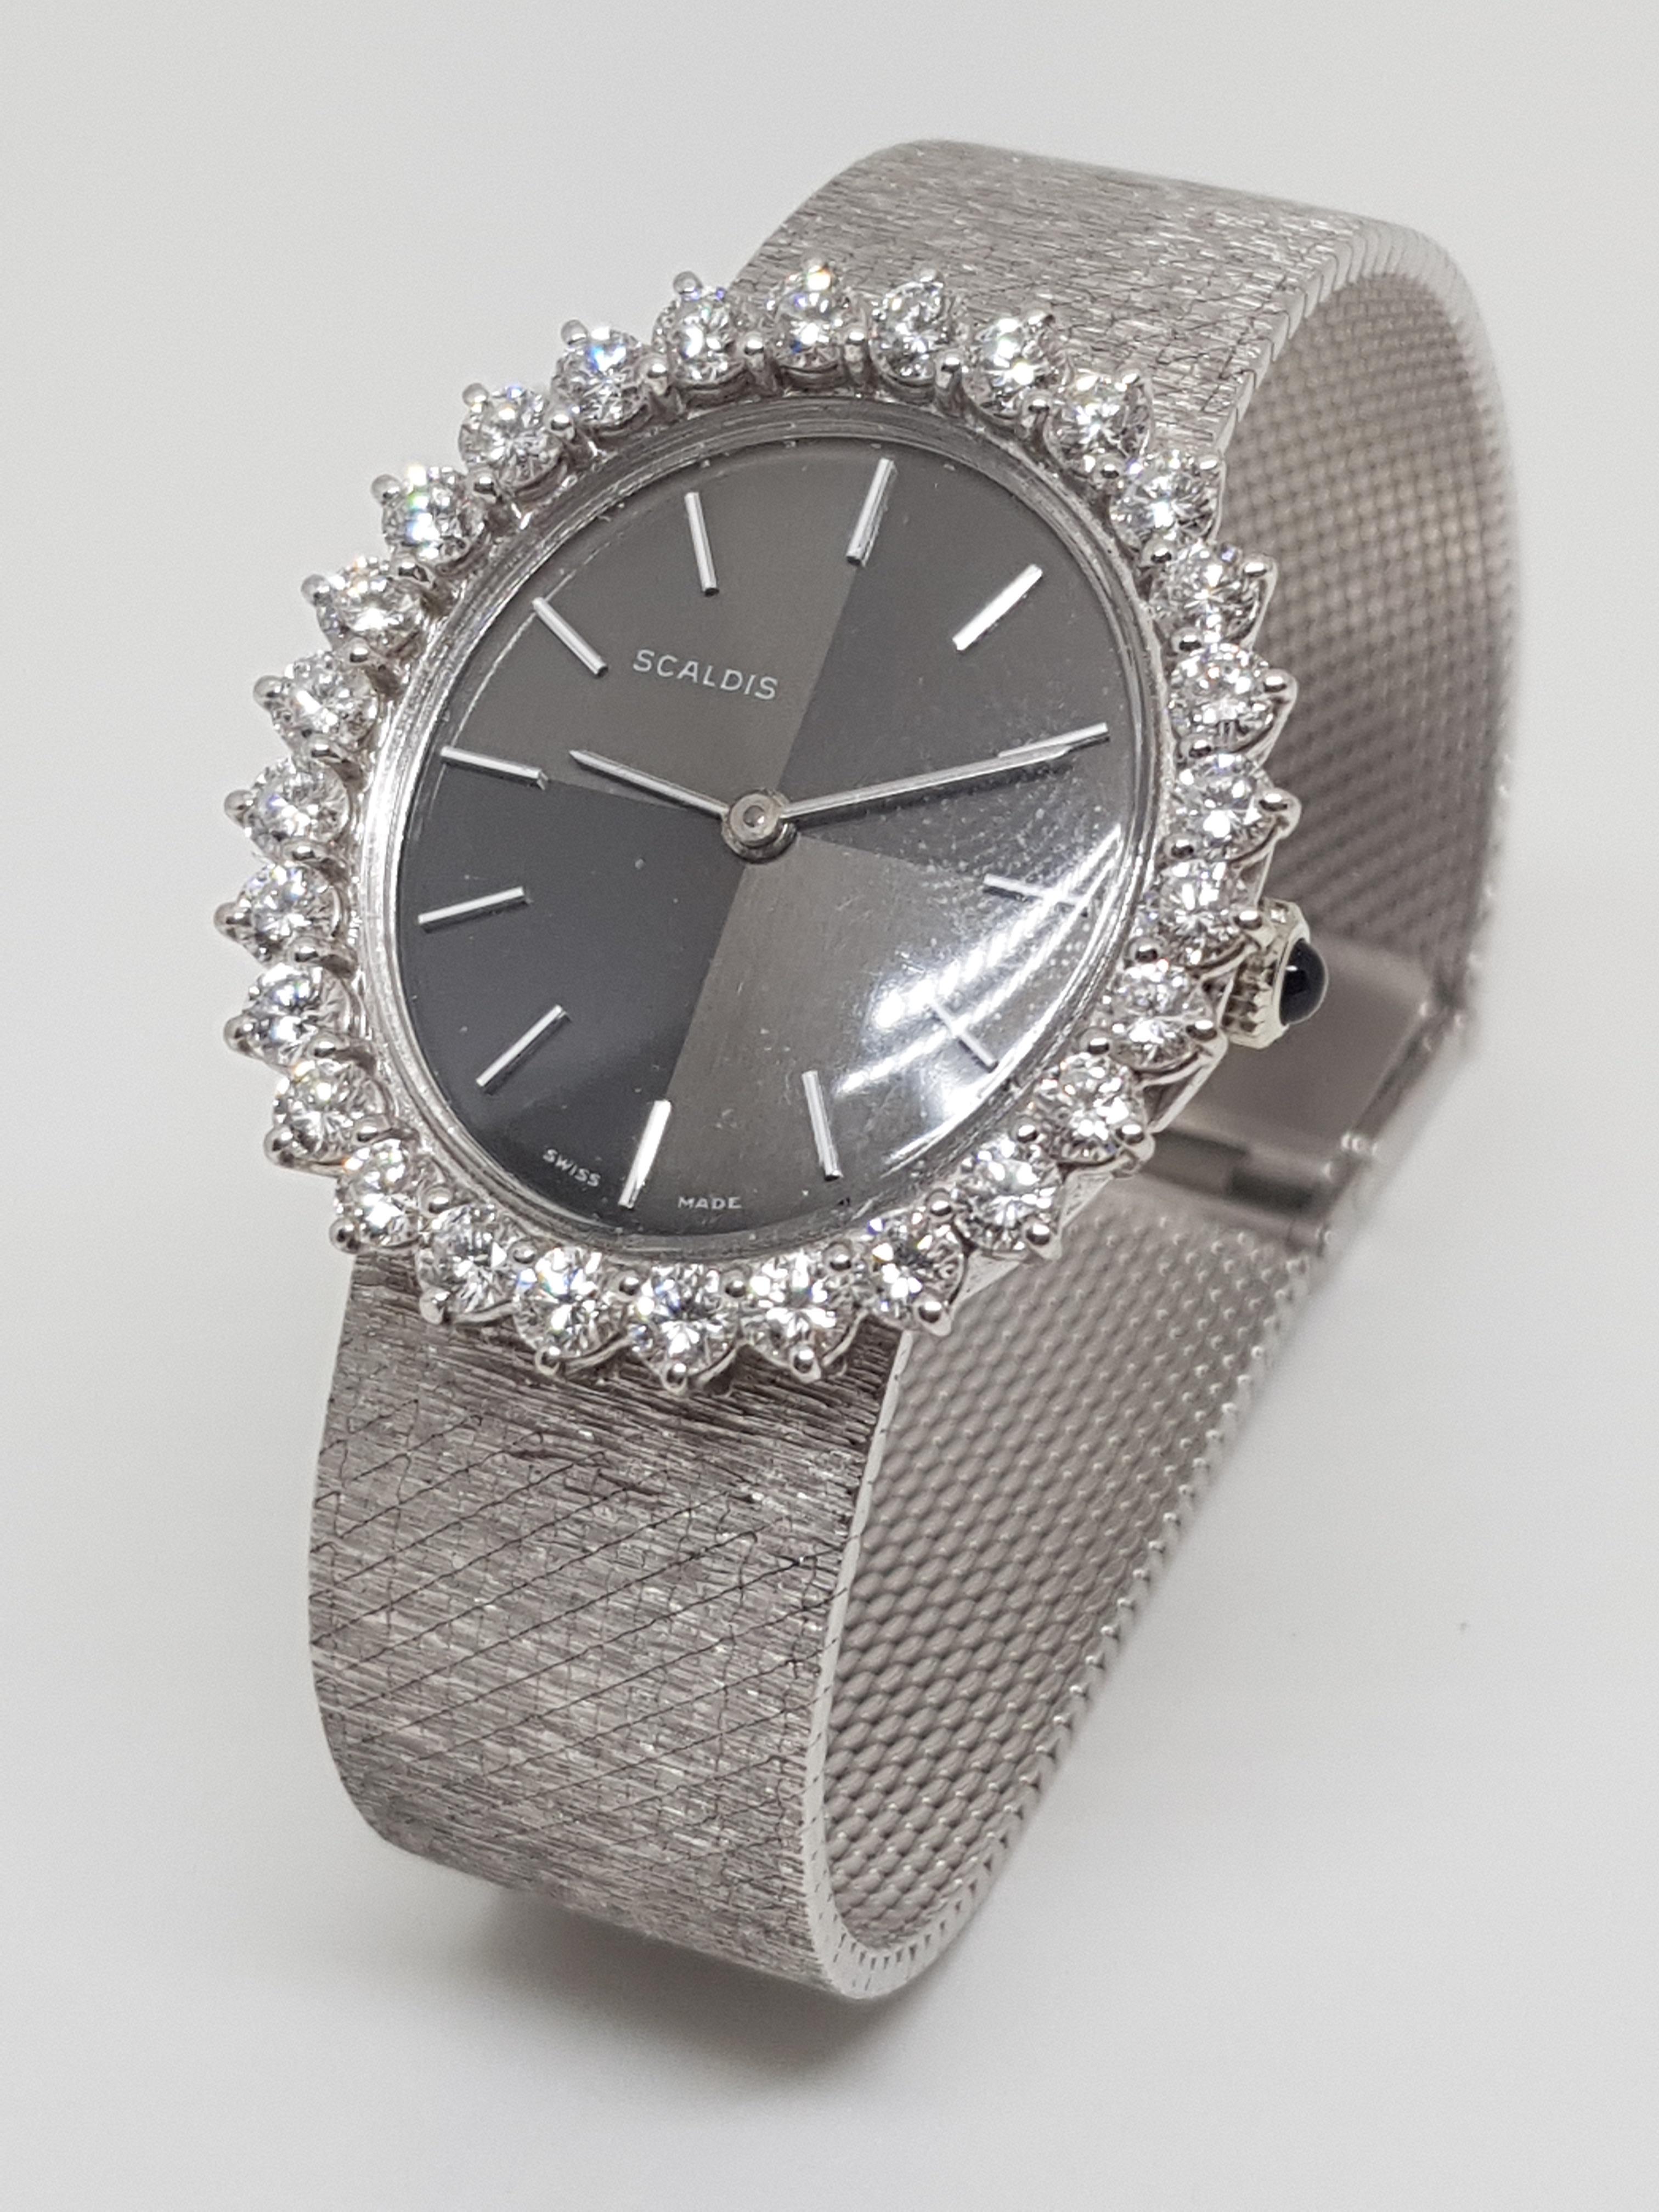 Scaldis 18 Karat White Gold Diamonds Vintage Ladies Watch 5